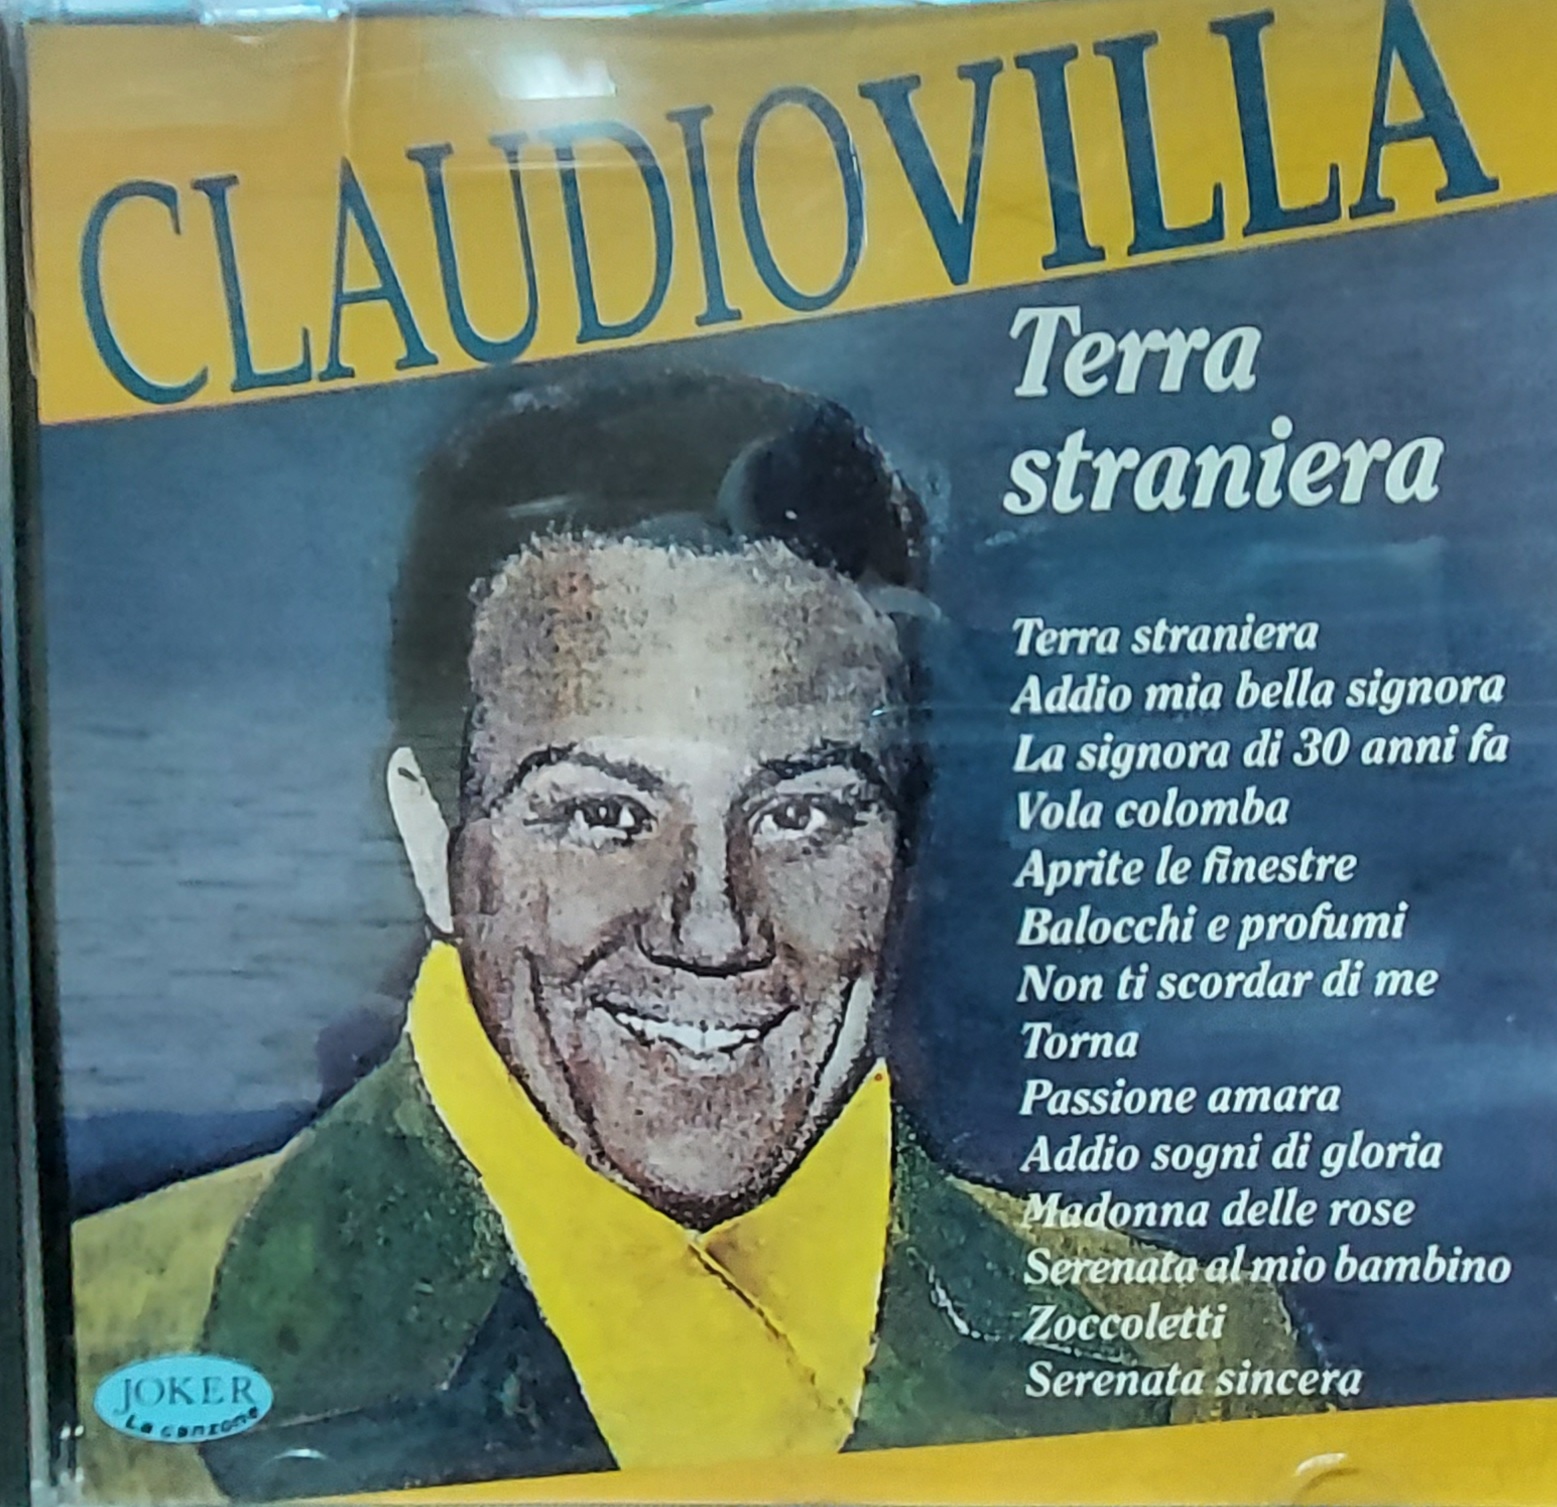 TERRA STRANIERA - CLAUDIO VILLA